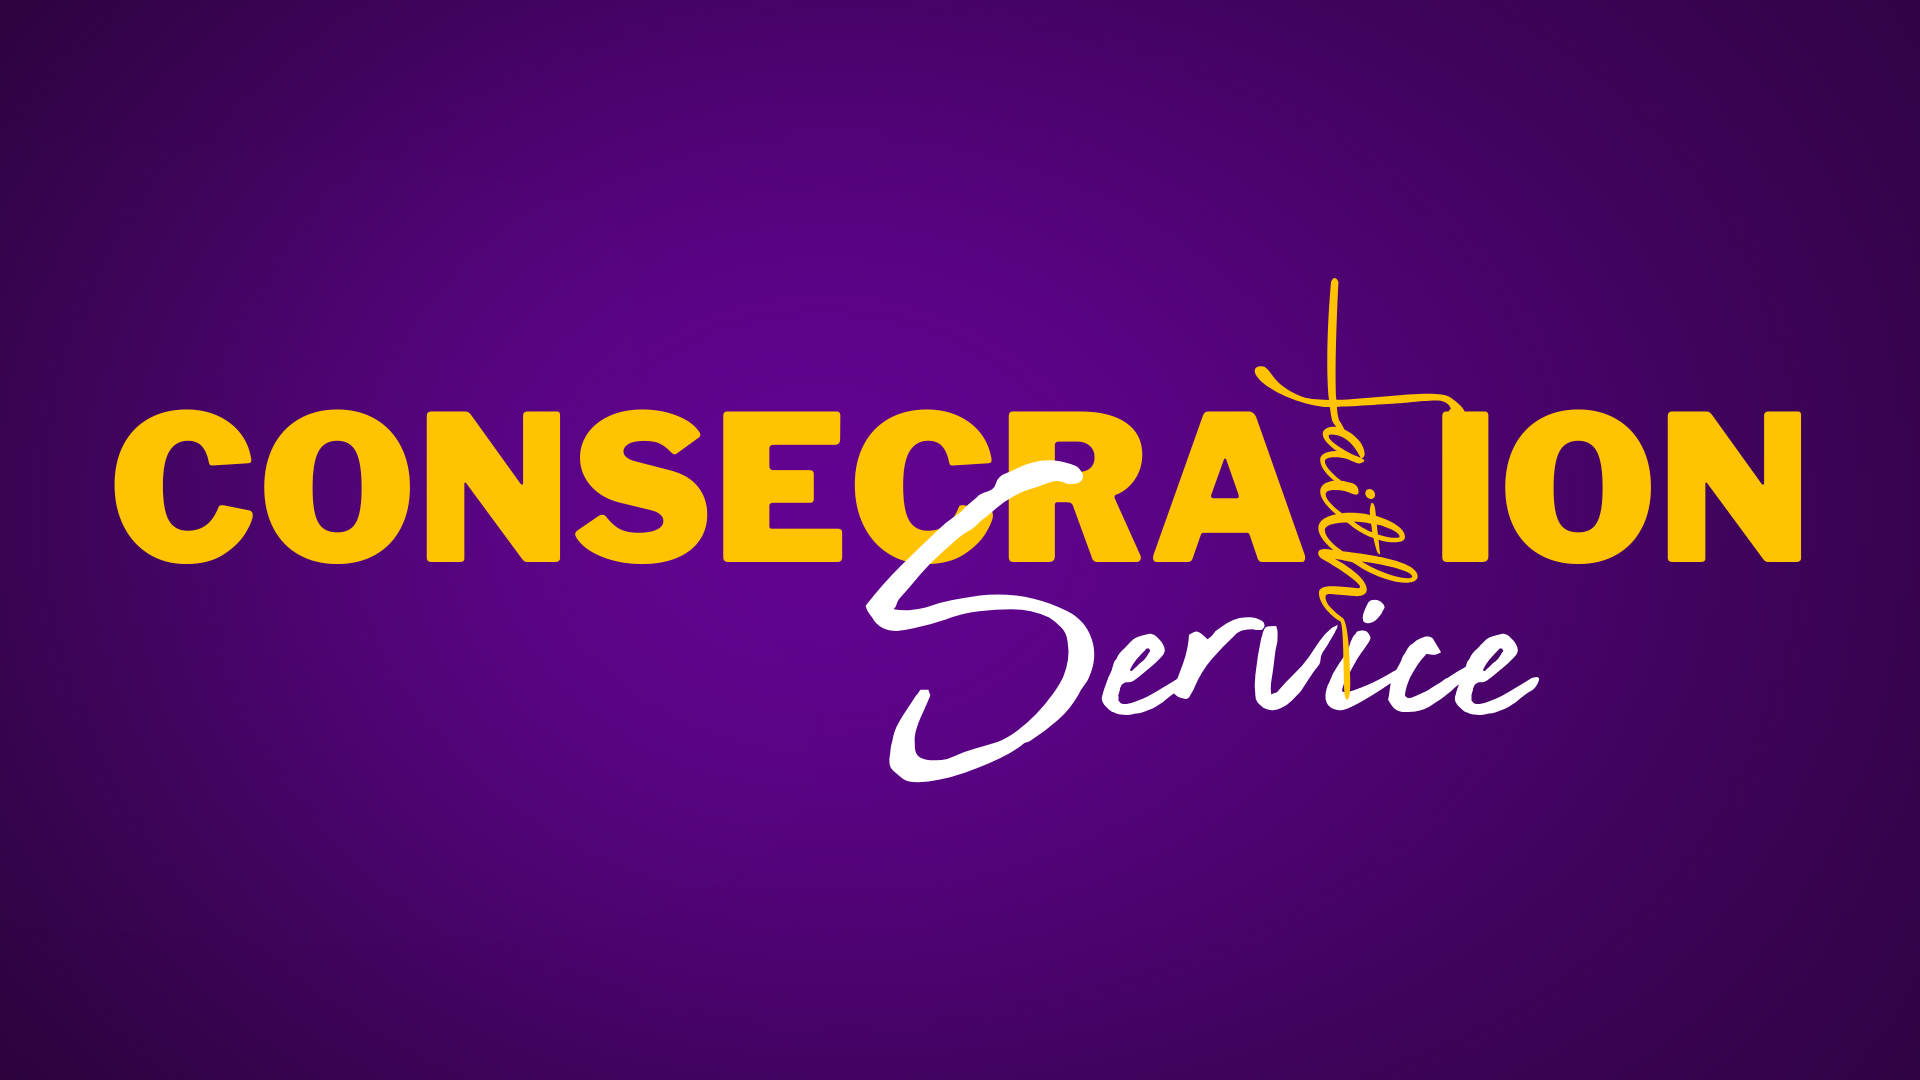 Consecration Service